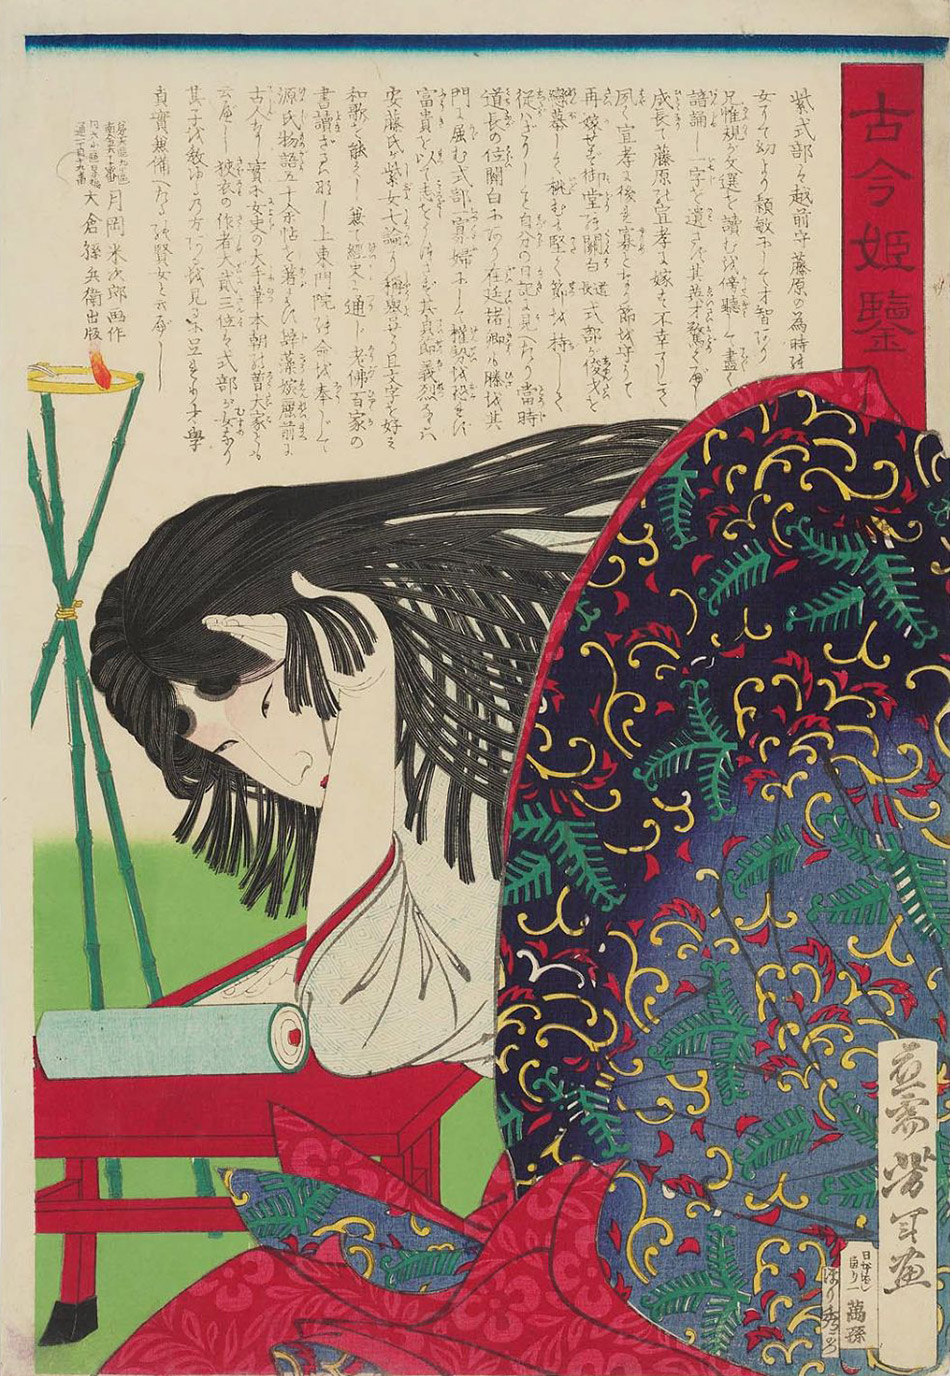 murasaki shikibu writing the tale of genji